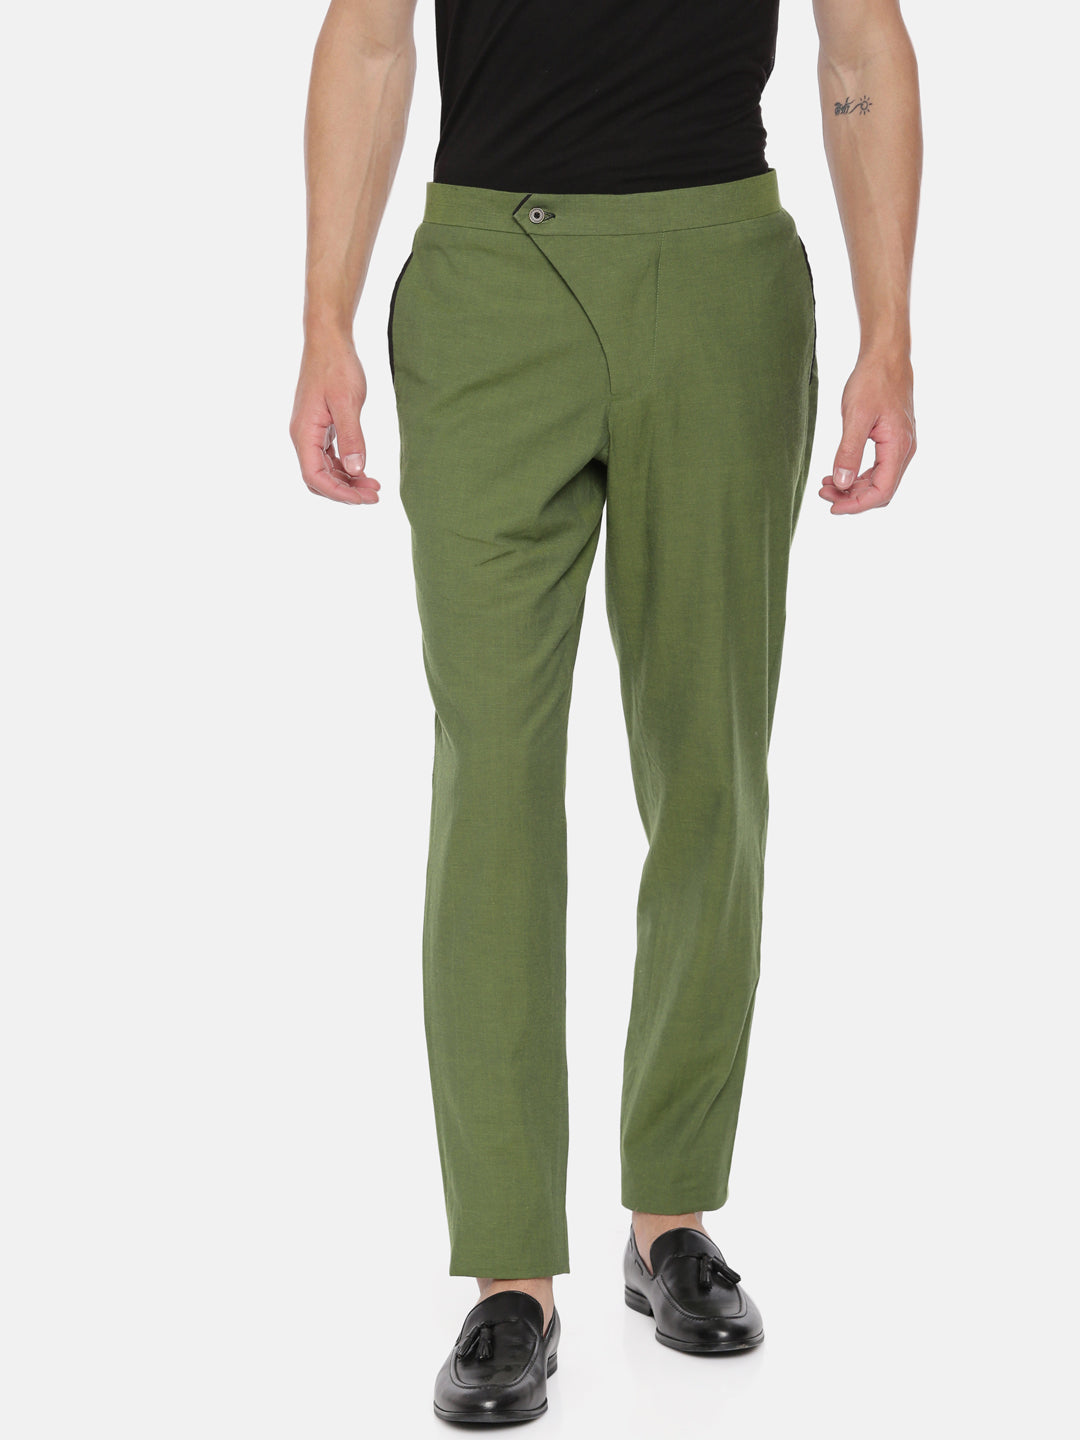 Shop Olive Green Regular Fit Cotton Trousers For Women  सद SAADAA   सद  SAADAA